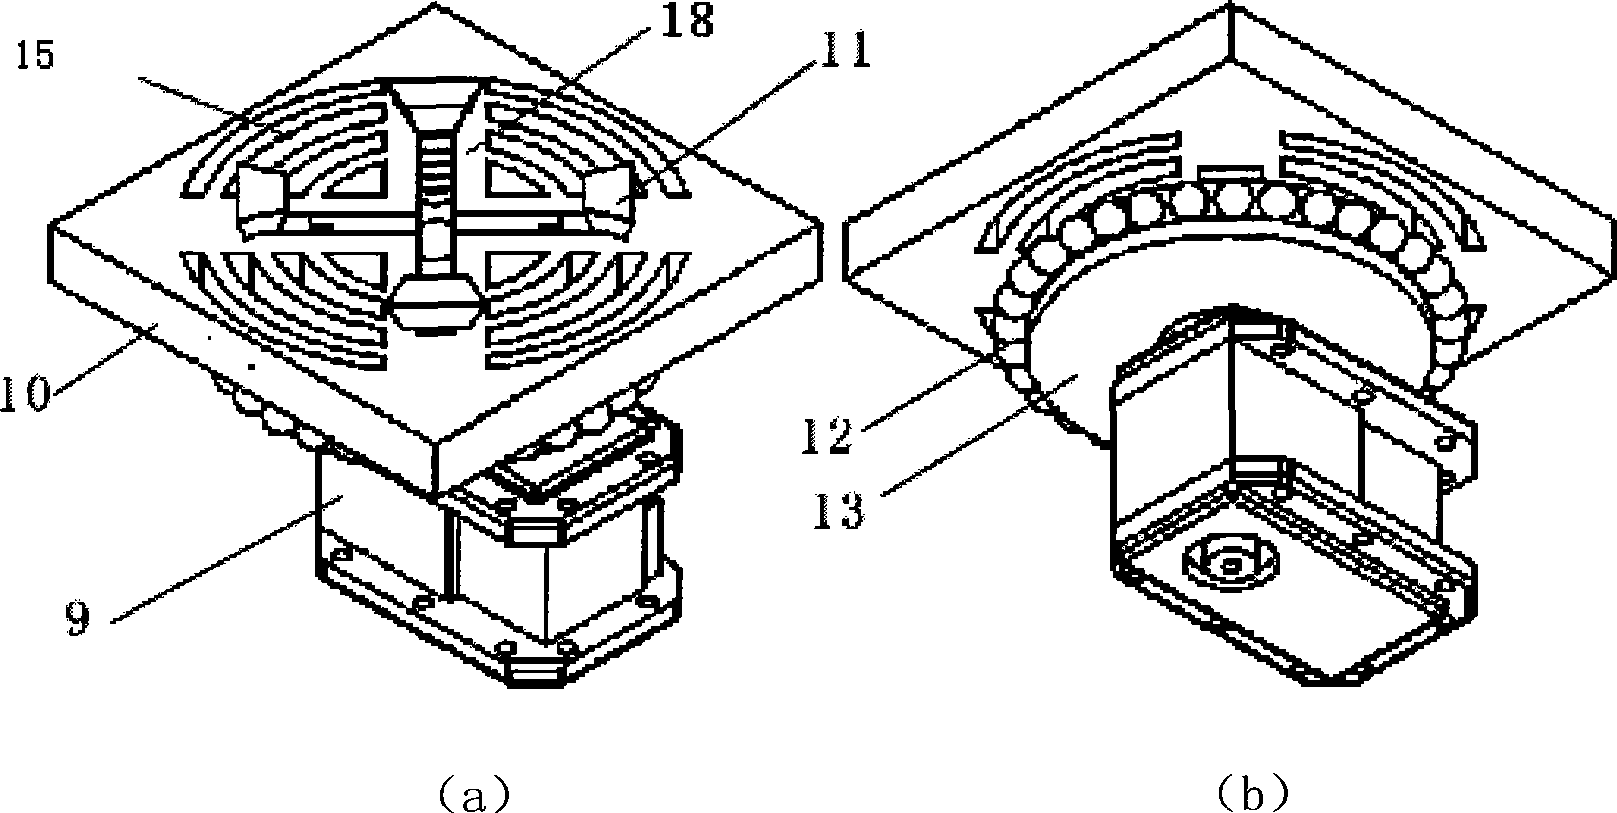 Three-arm buttjunction module flat lattice type self-reorganization robot